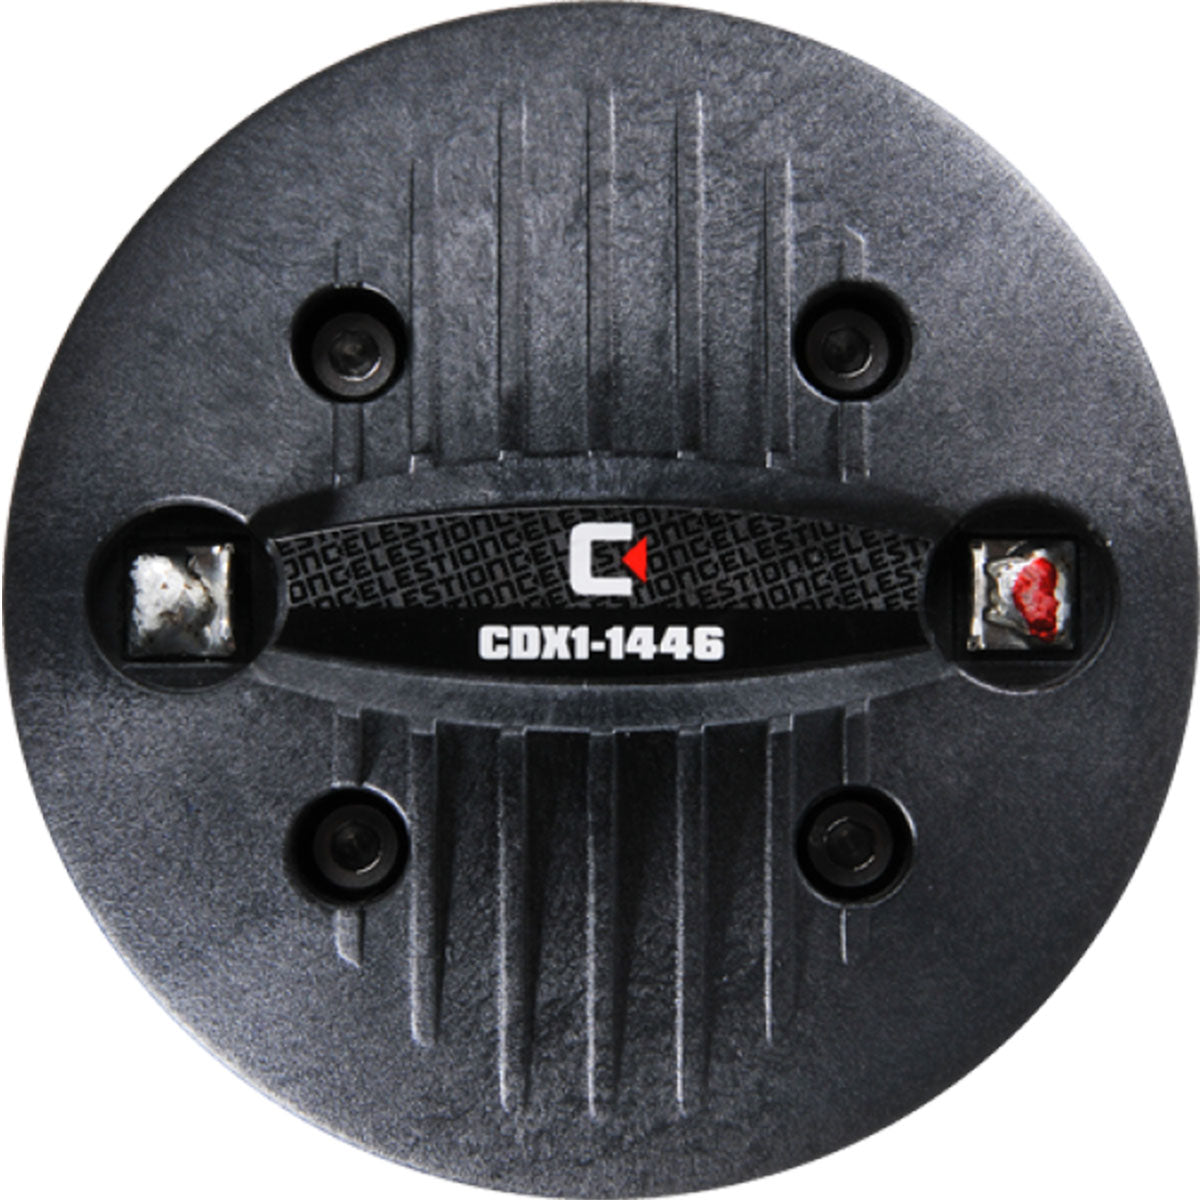 Celestion T5796 CDX1 1446 Ferrite Magnet Compression Driver 1 Inch 20W HF 8OHM